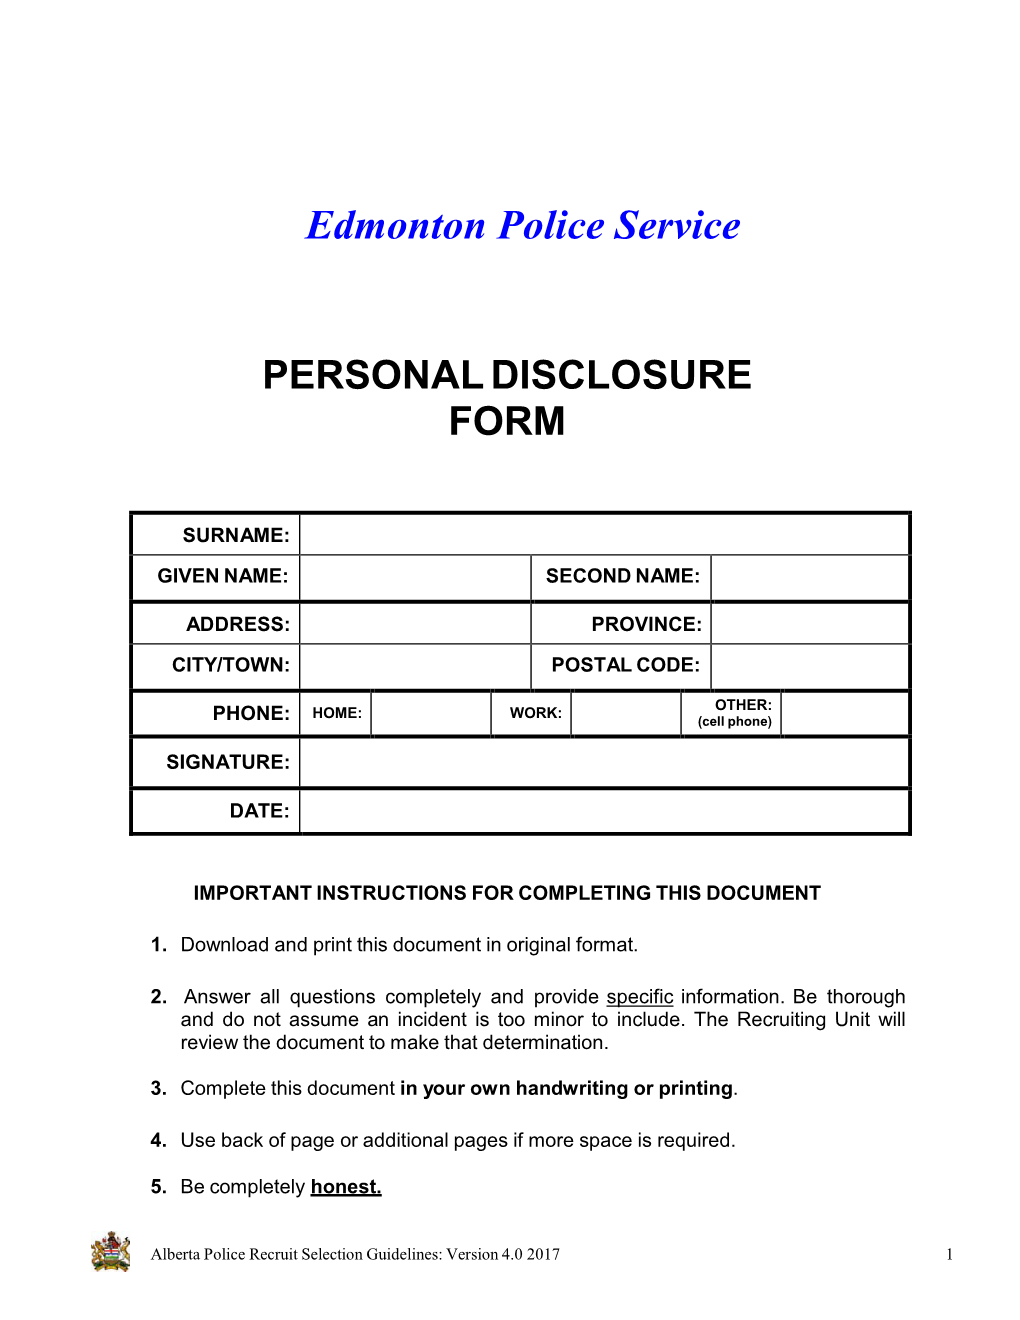 Personal Disclosure Form